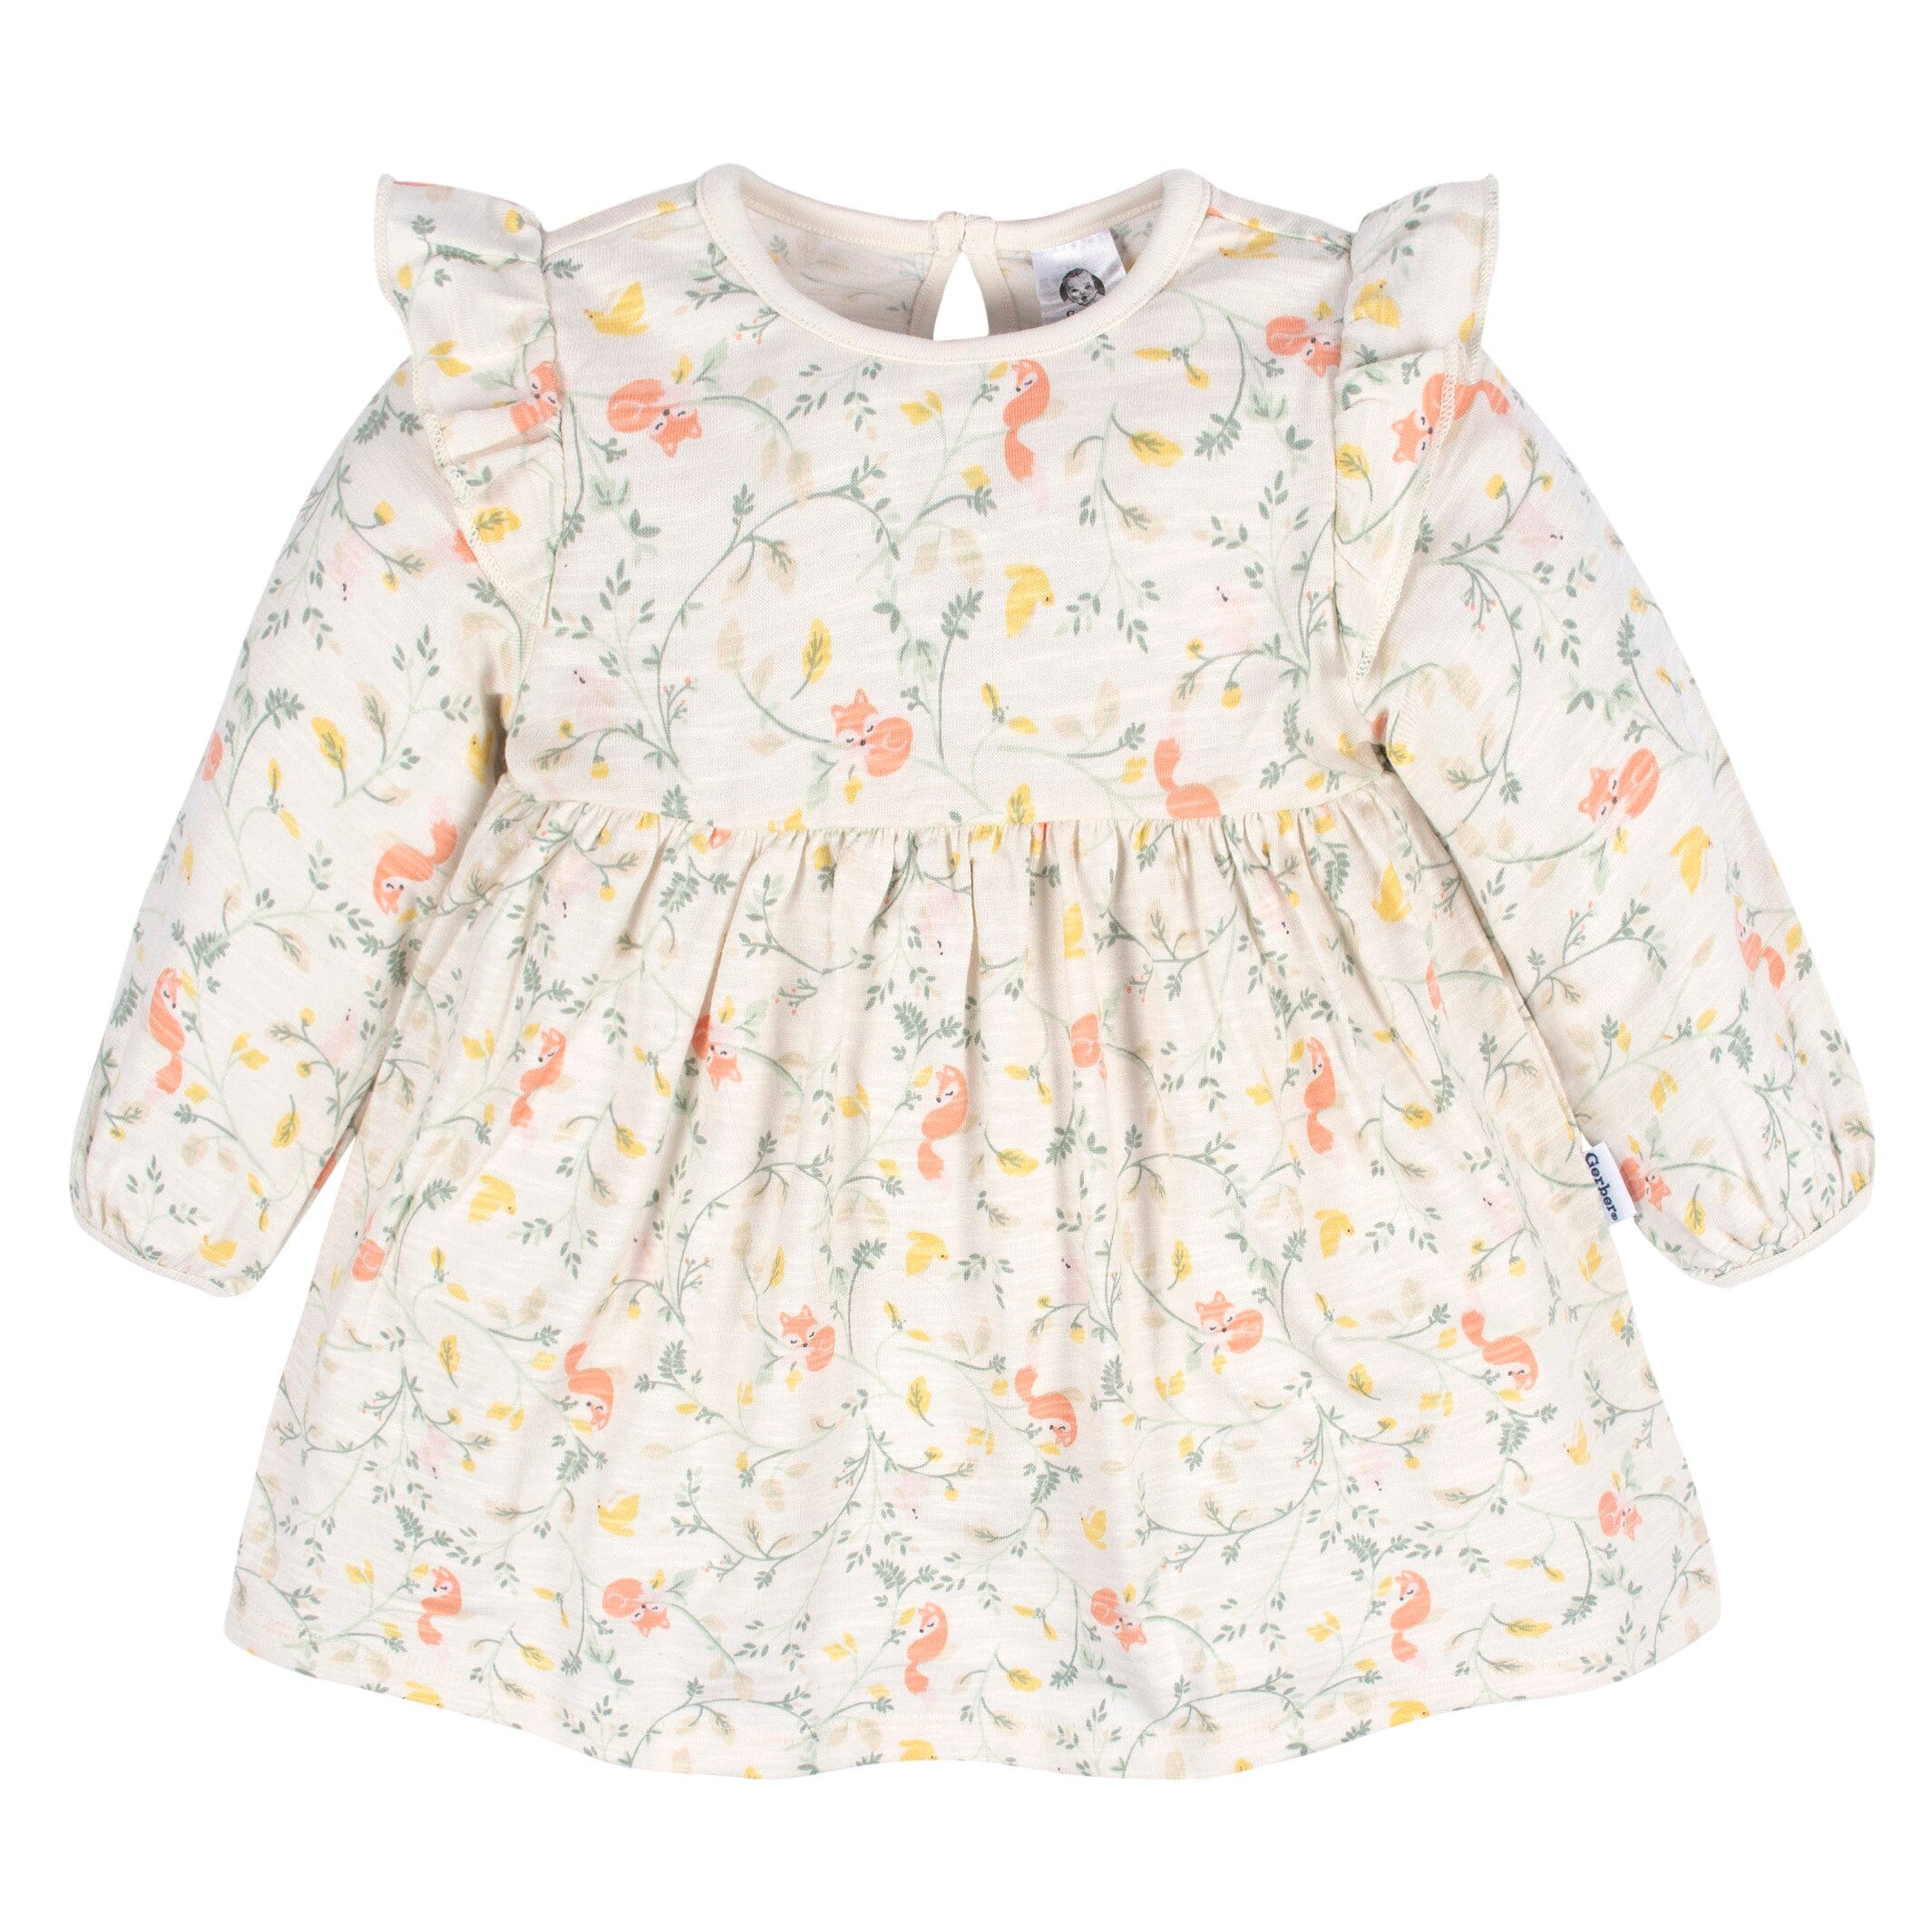 Infant Baby Girl Dress Cotton Regular Sleeveless Dresses Casual Clothing  0-24 KP | eBay